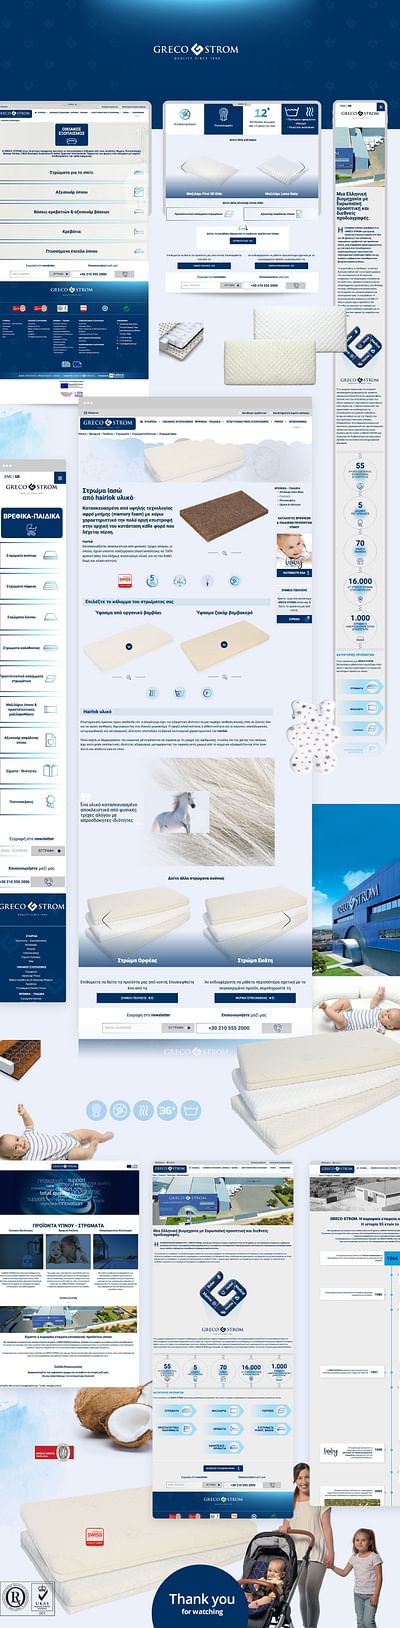 GRECO STROM Sleep mattresses - Digitale Strategie